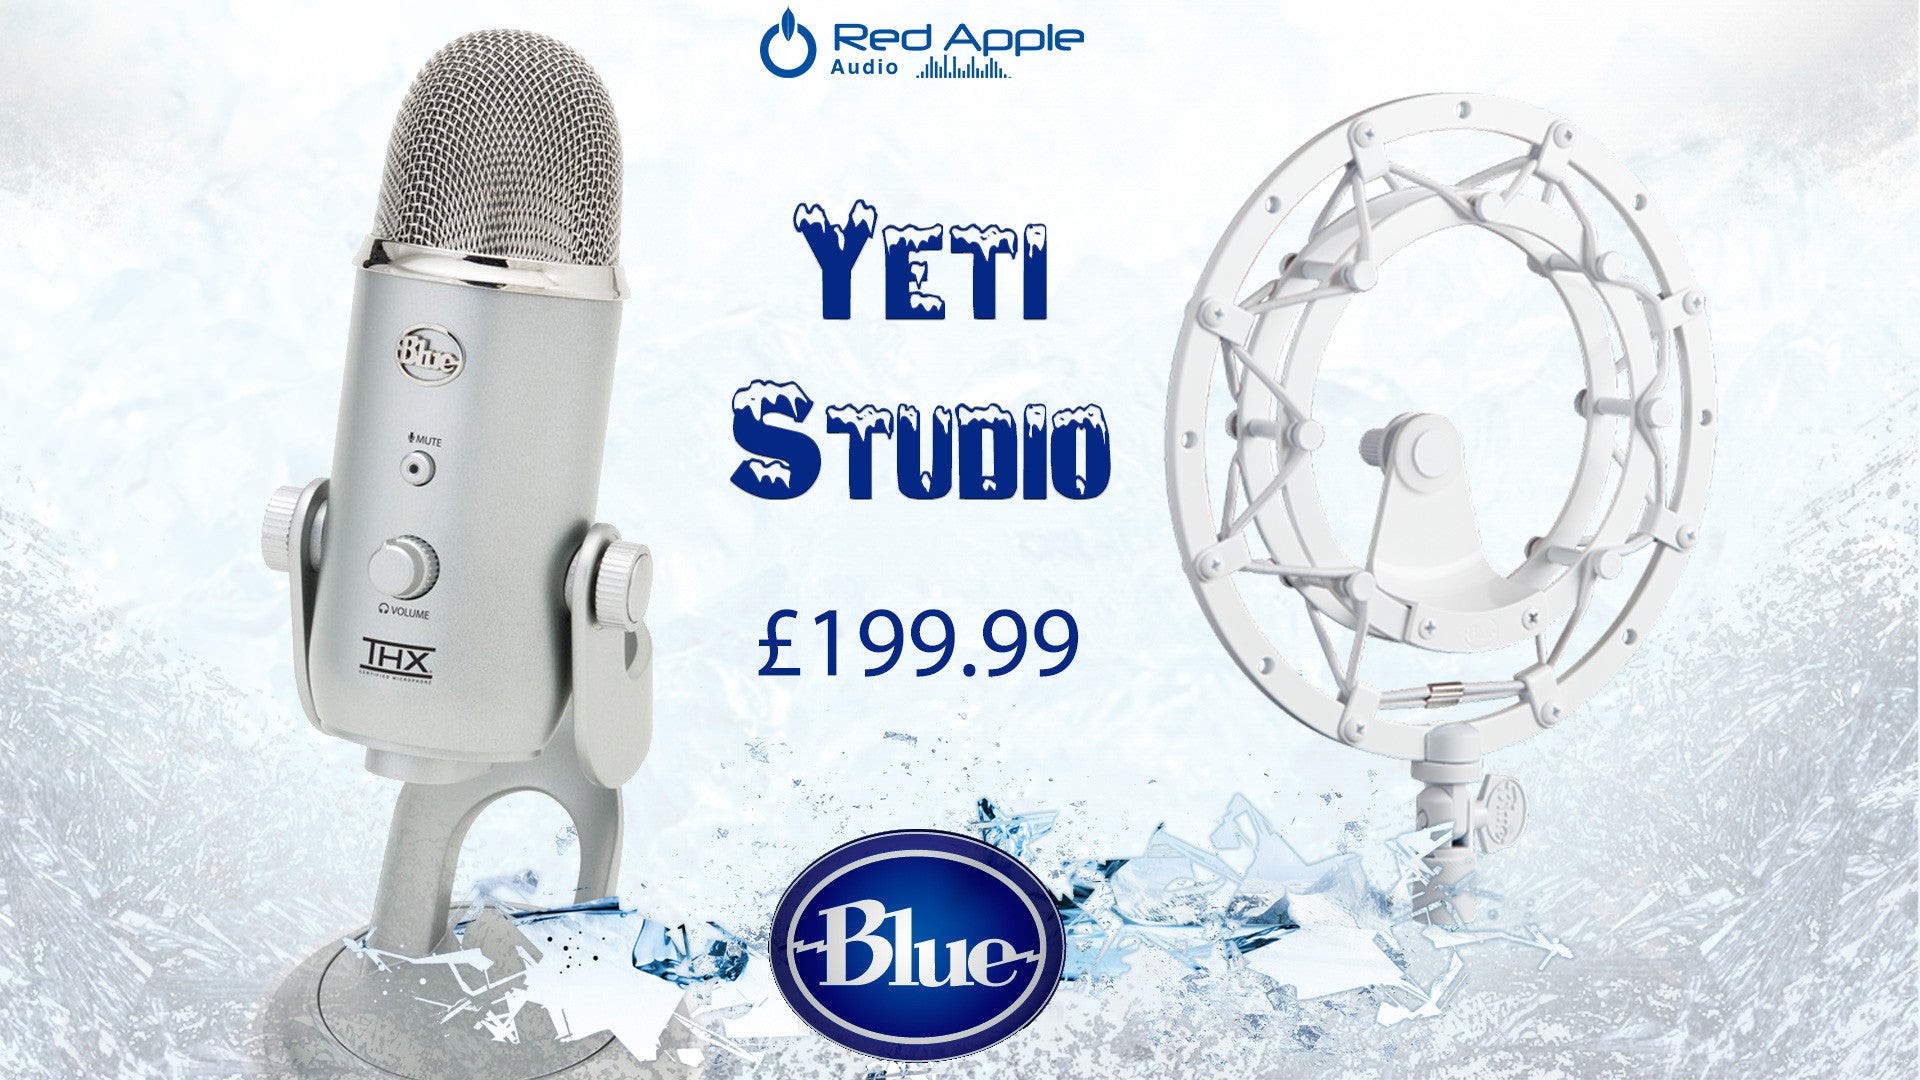 Blue Yeti Microphone Shock Mount Bundle Red Apple Audio